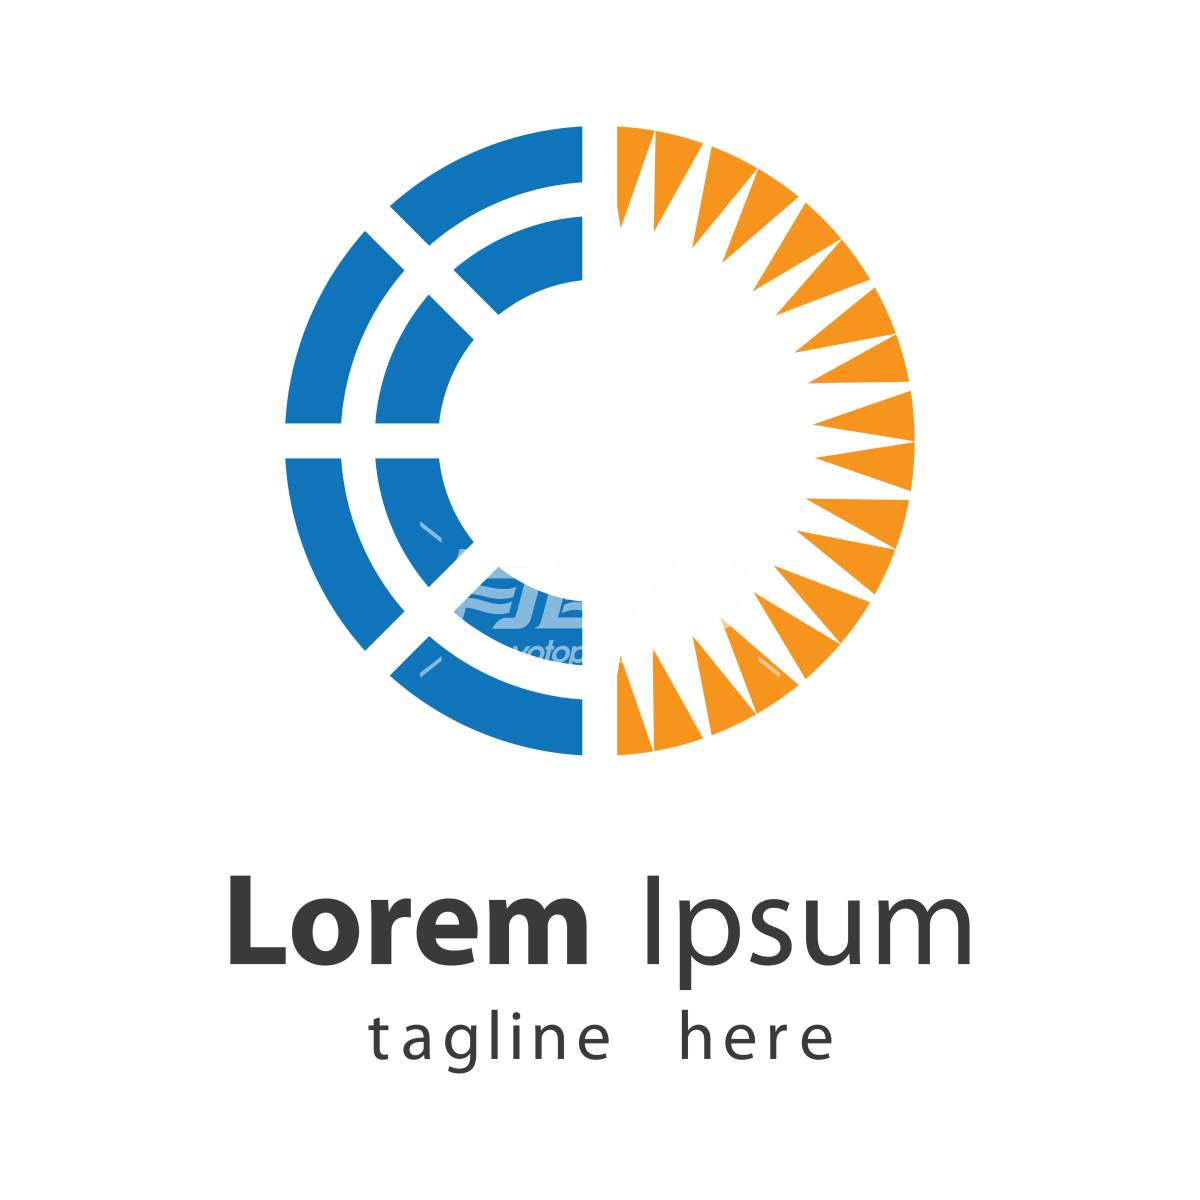 Lorem Ipsum标志logo设计